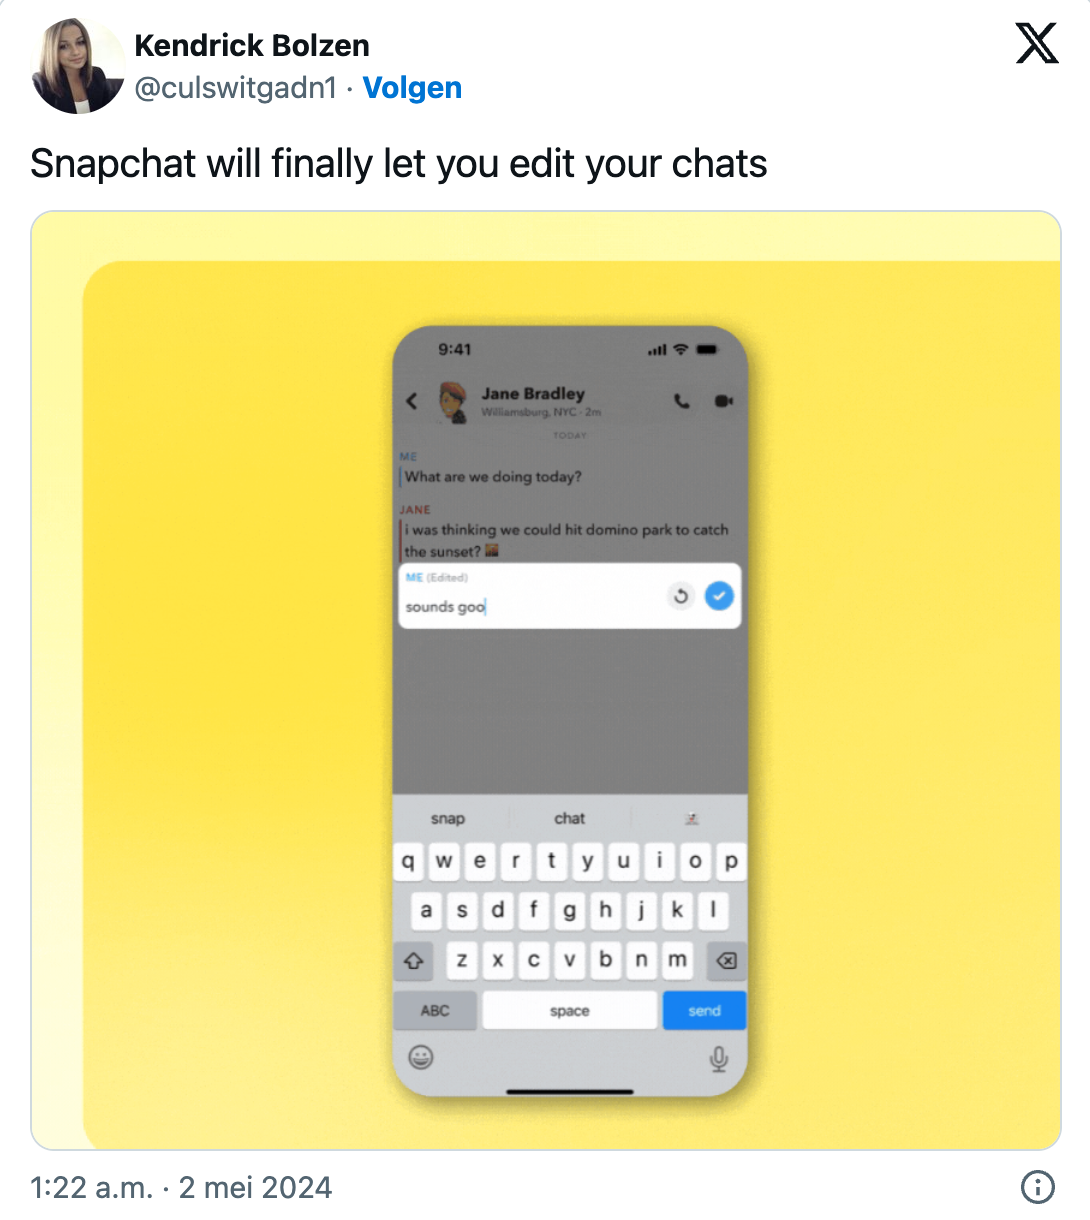 Tweet over Snapchat